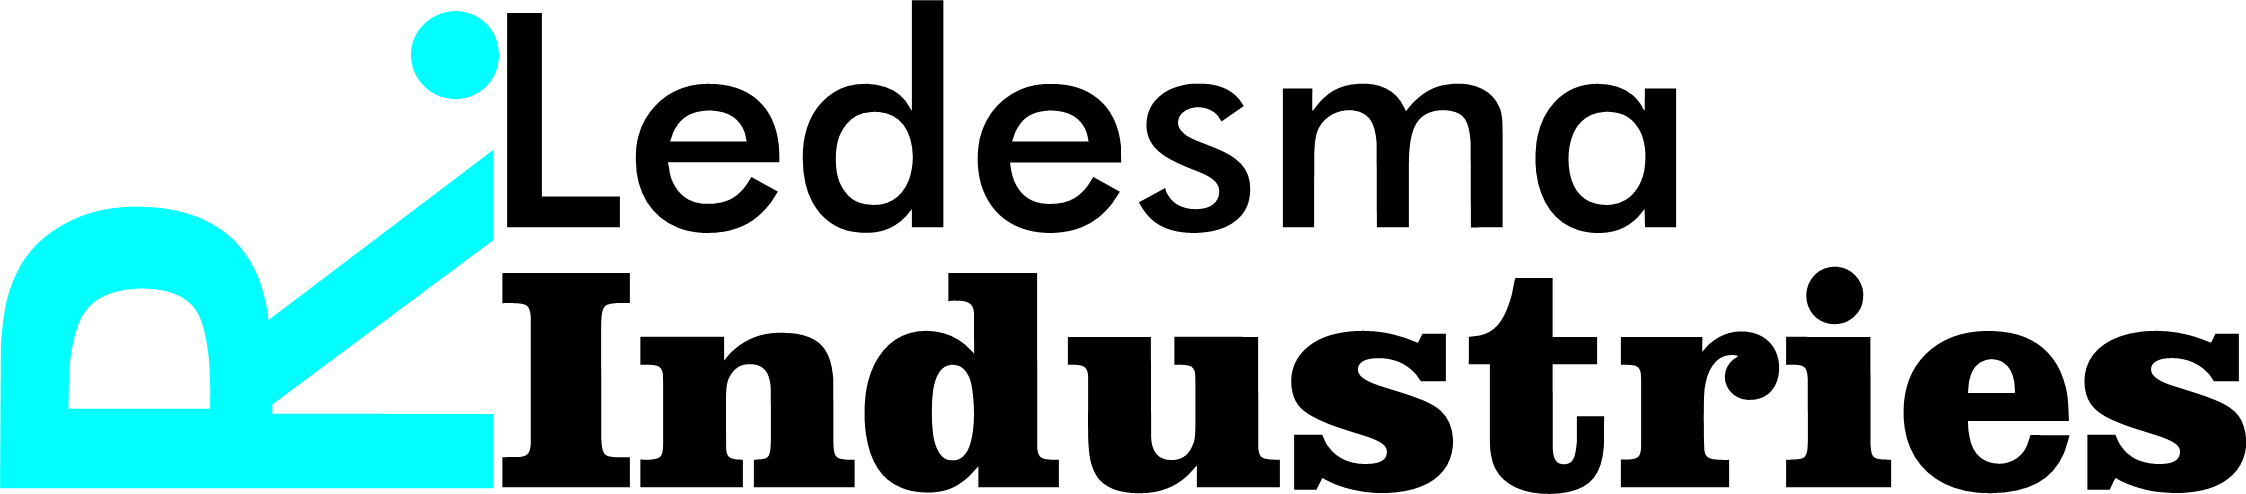 R. Ledesma Industries Logo